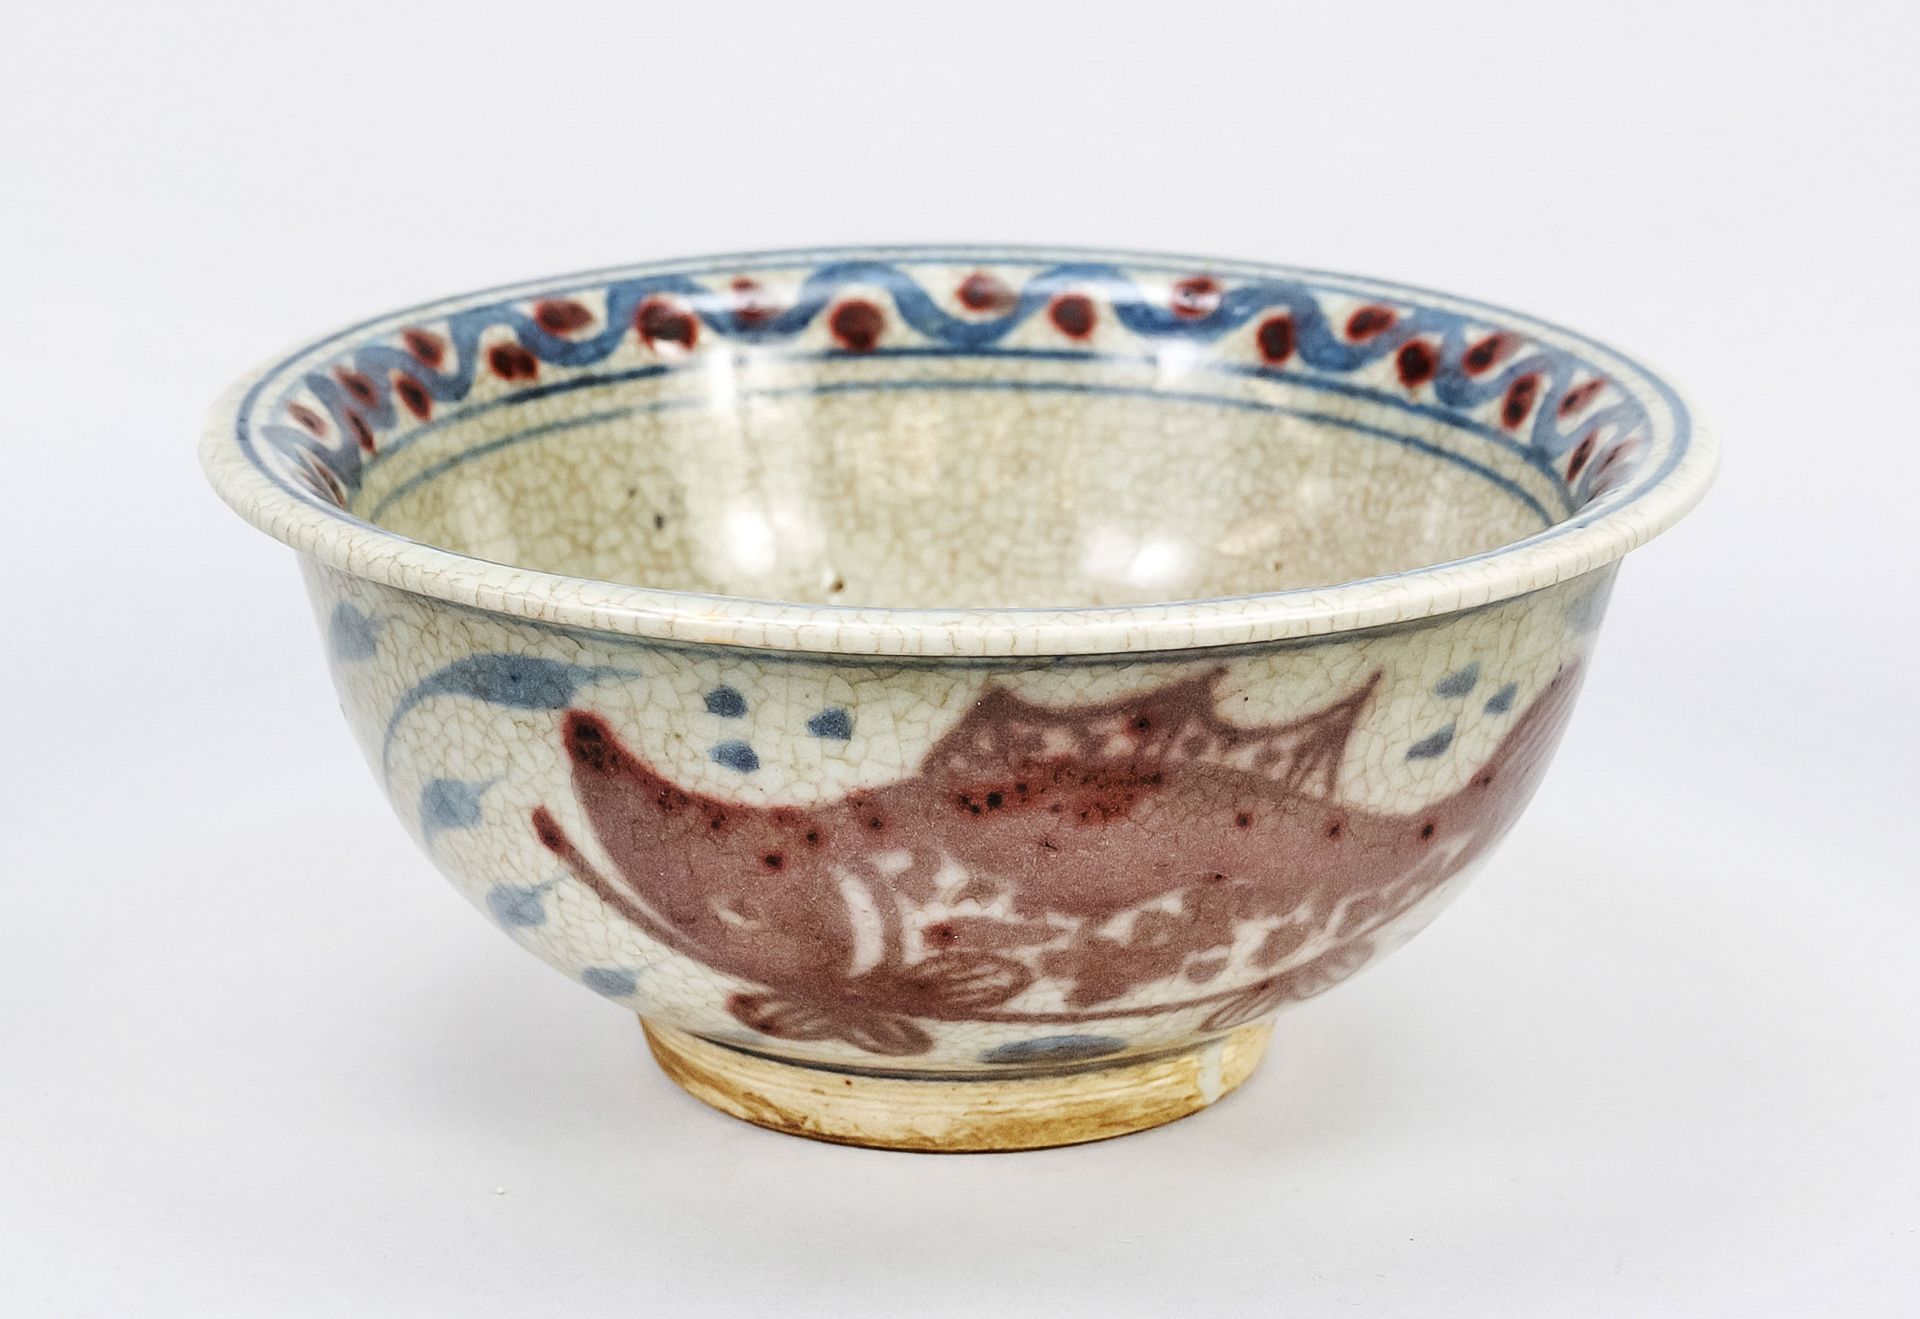 Fish bowl, China, Ming dynasty(1368-1644), stoneware bowl with greenish crackled glaze, cobalt